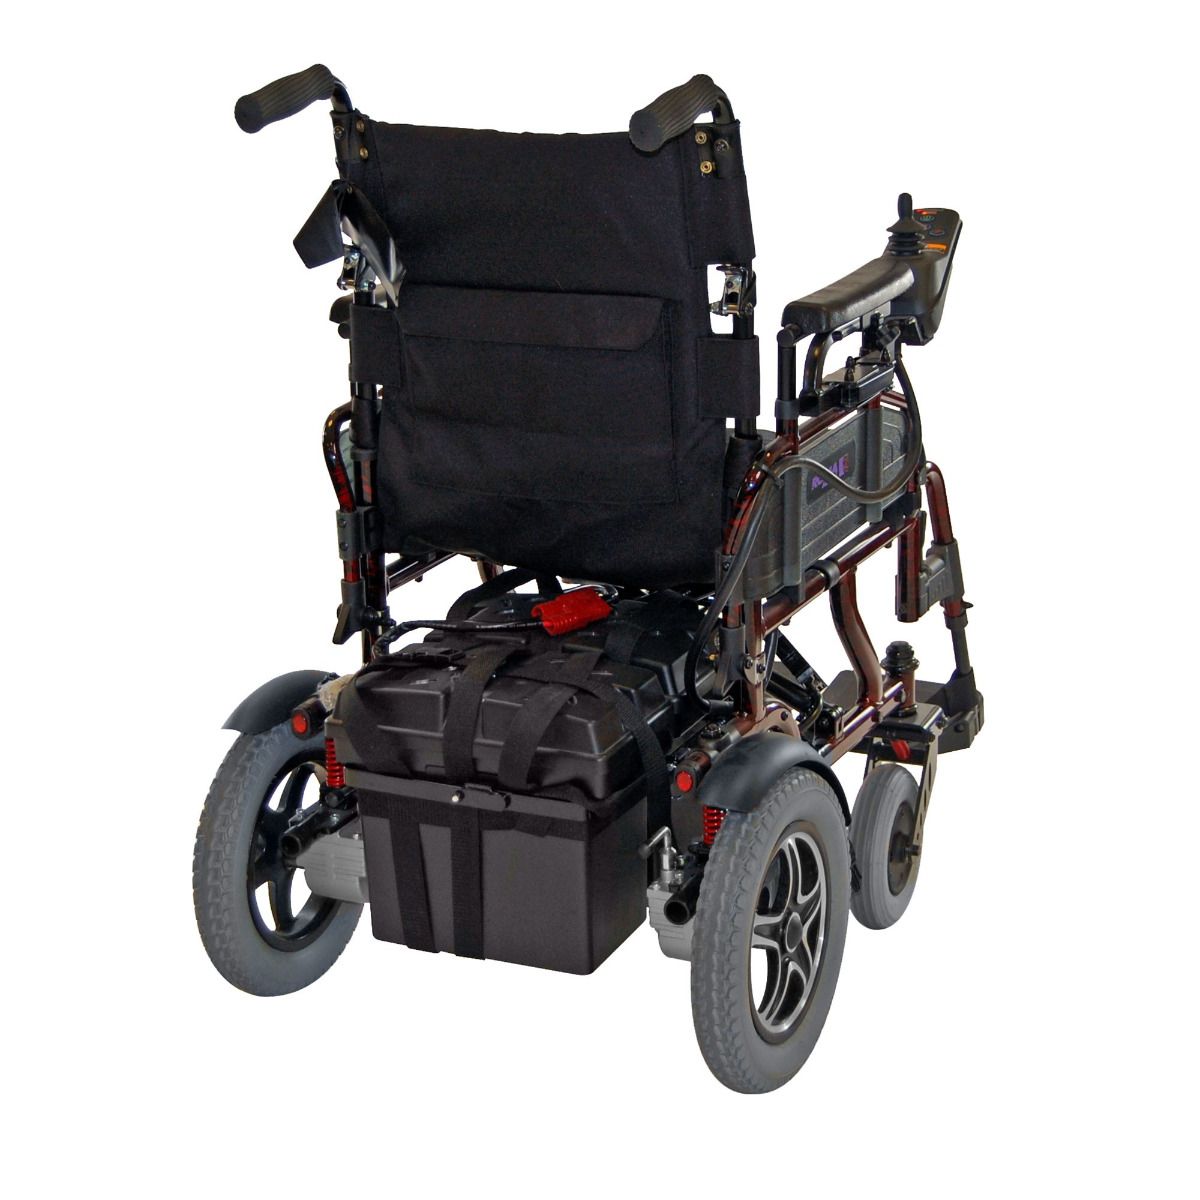 Roma Shoprider Sirocco Electric Wheelchair rear view